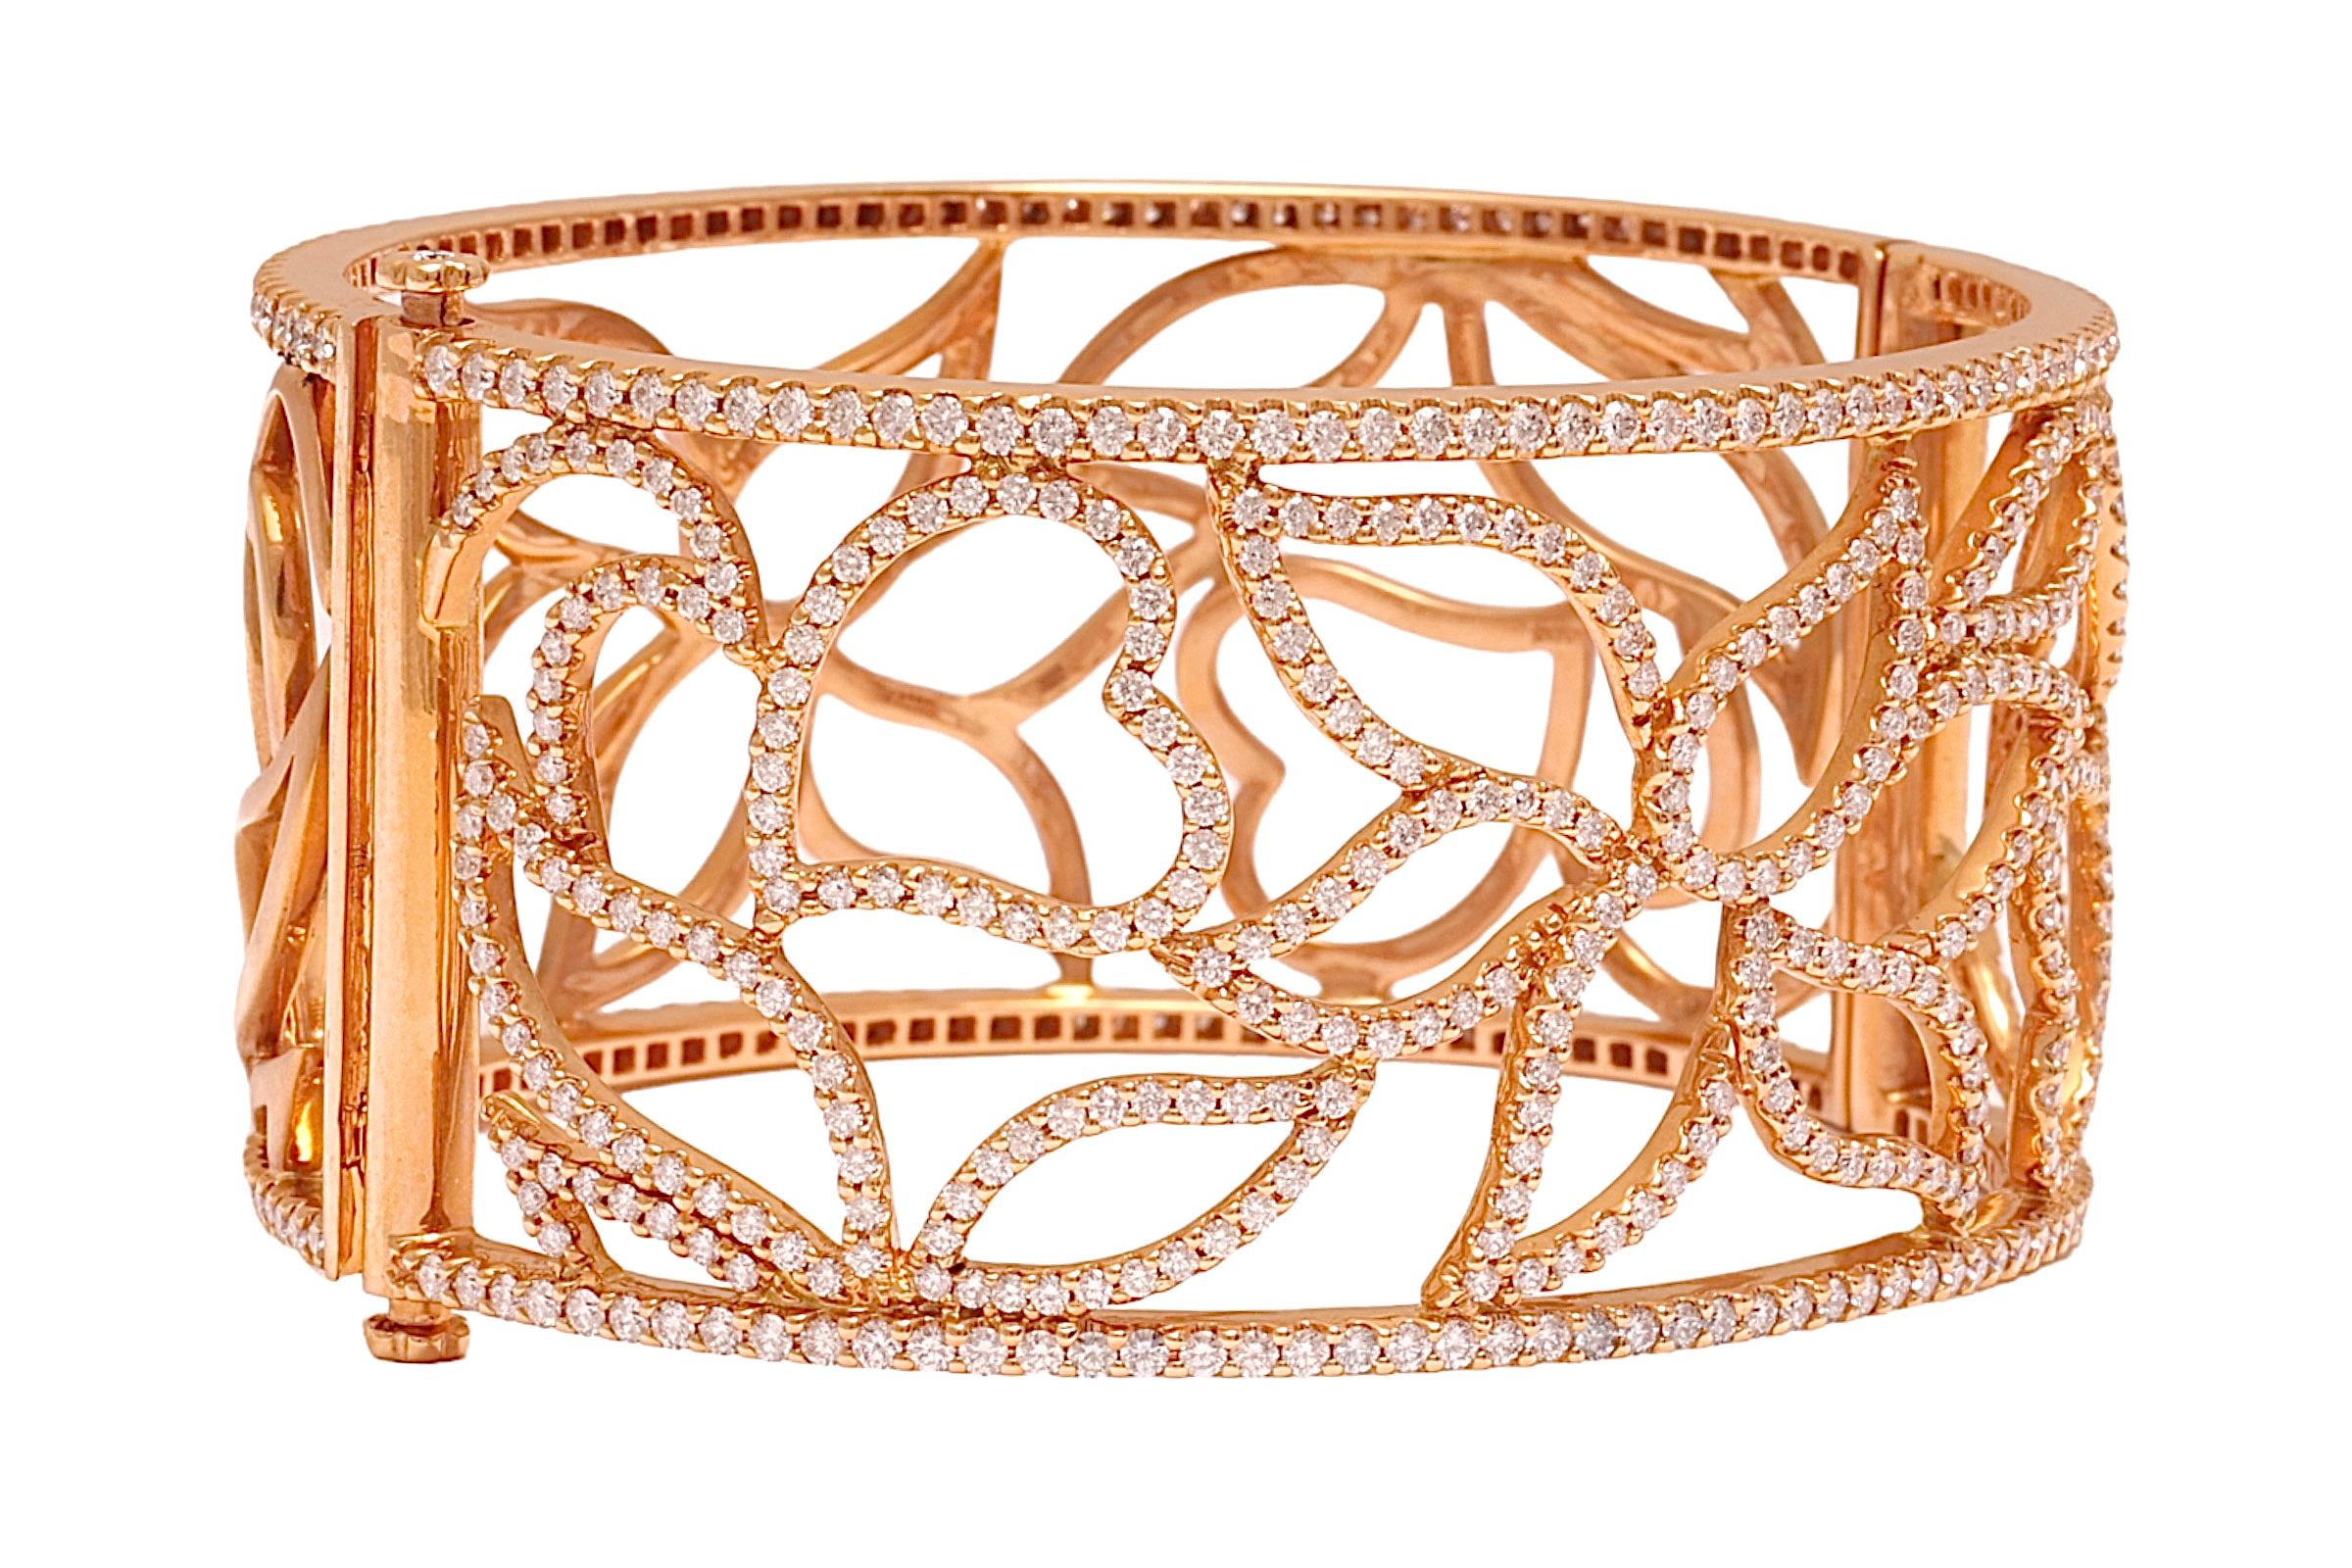 18kt Pink Gold Cuff Bracelet, Flower Design, set with 5.87 ct. Diamonds, 2 Sided For Sale 1